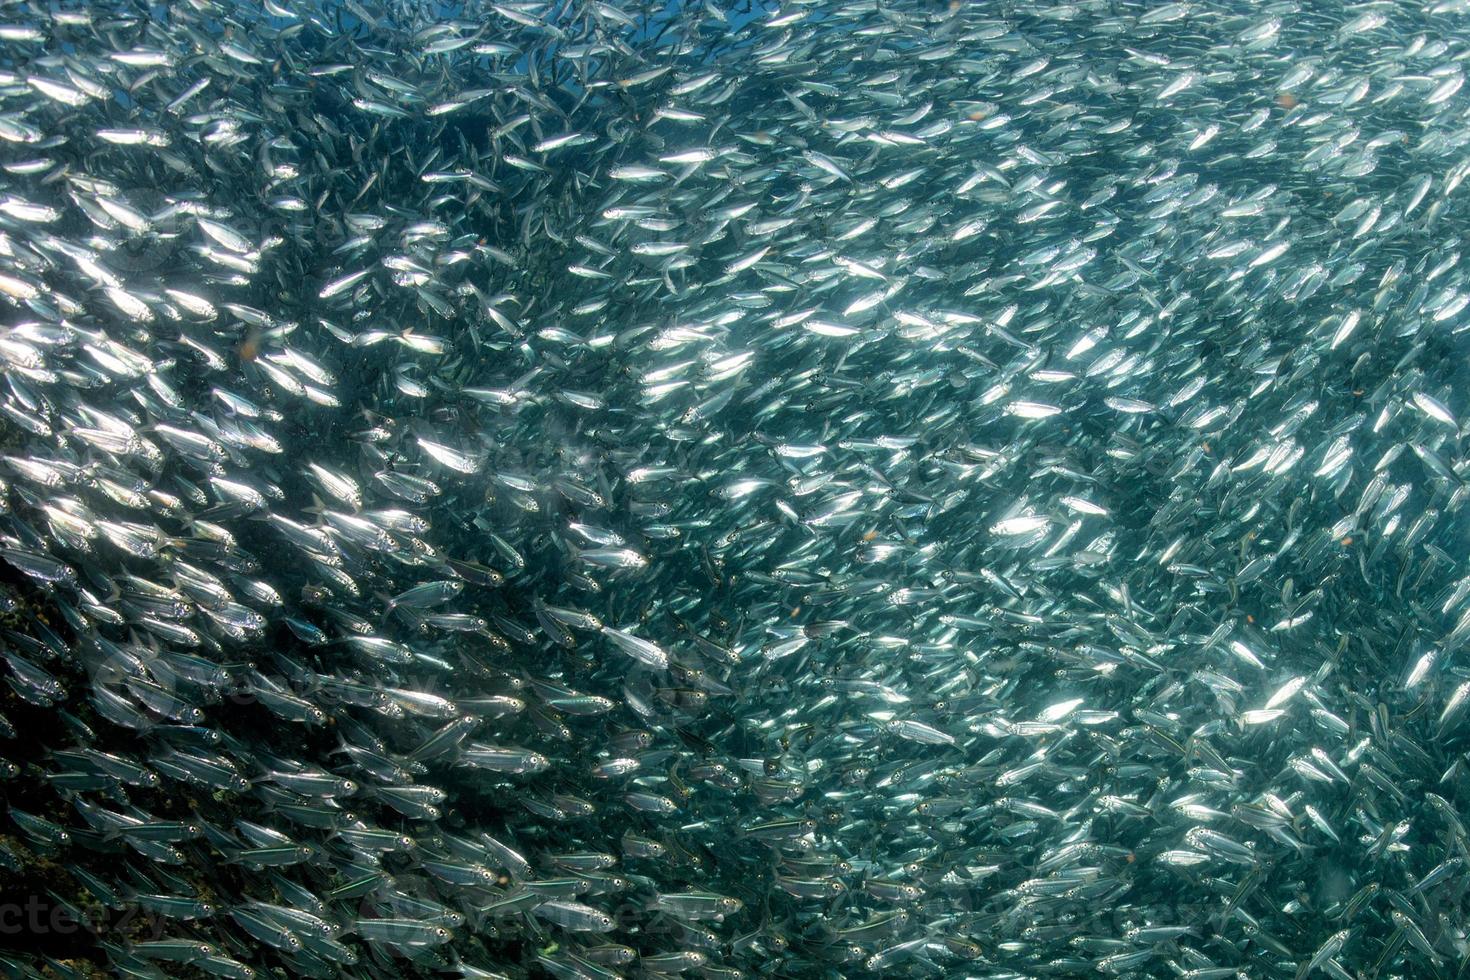 Entering Inside sardine school of fish underwater photo